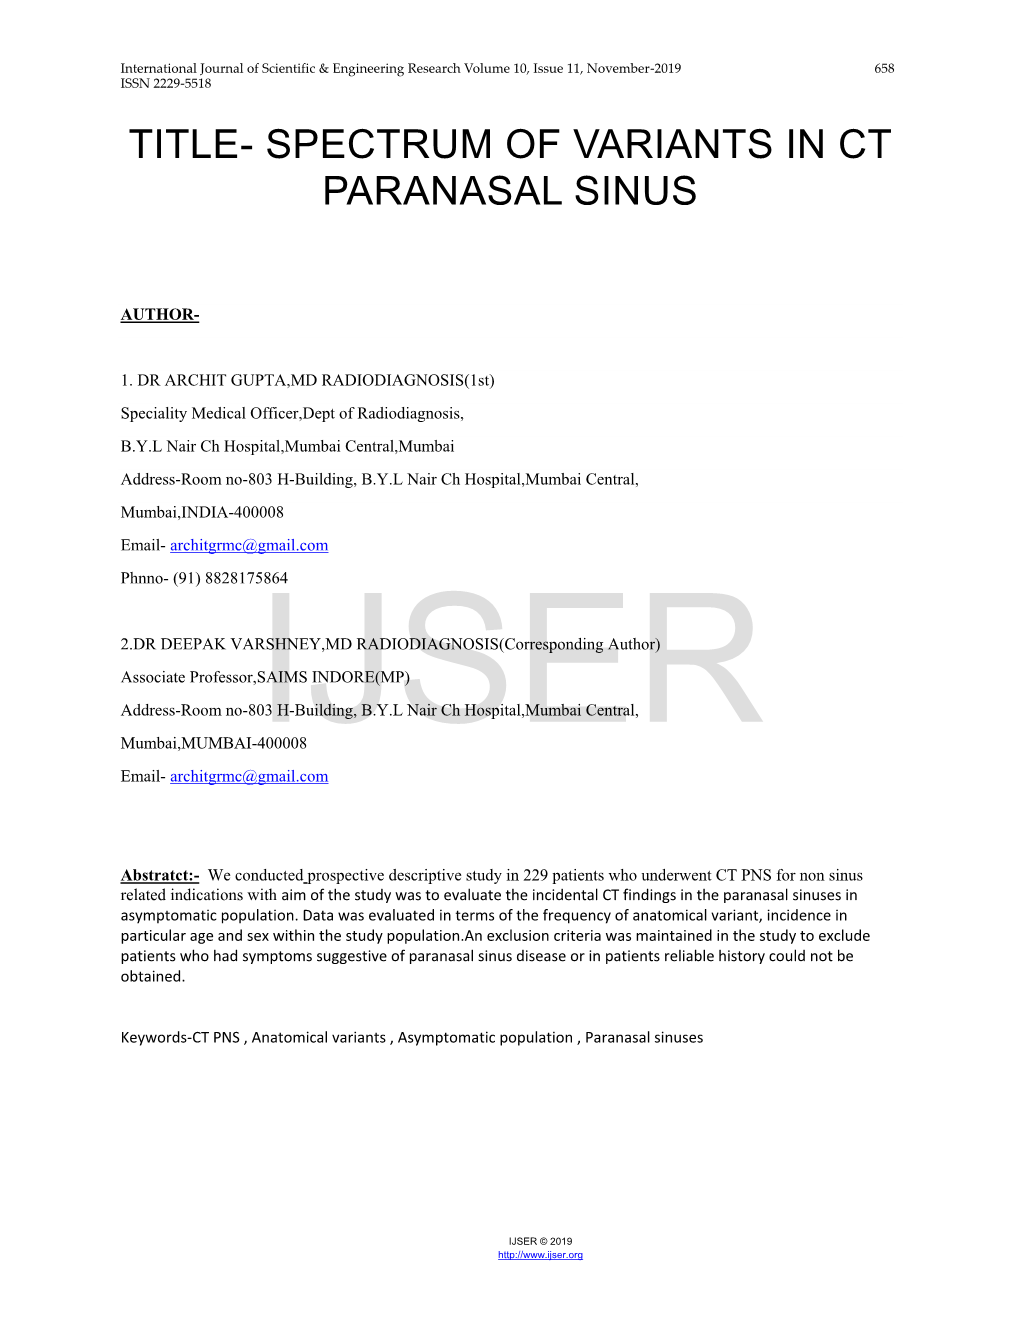 Spectrum of Variants in Ct Paranasal Sinus